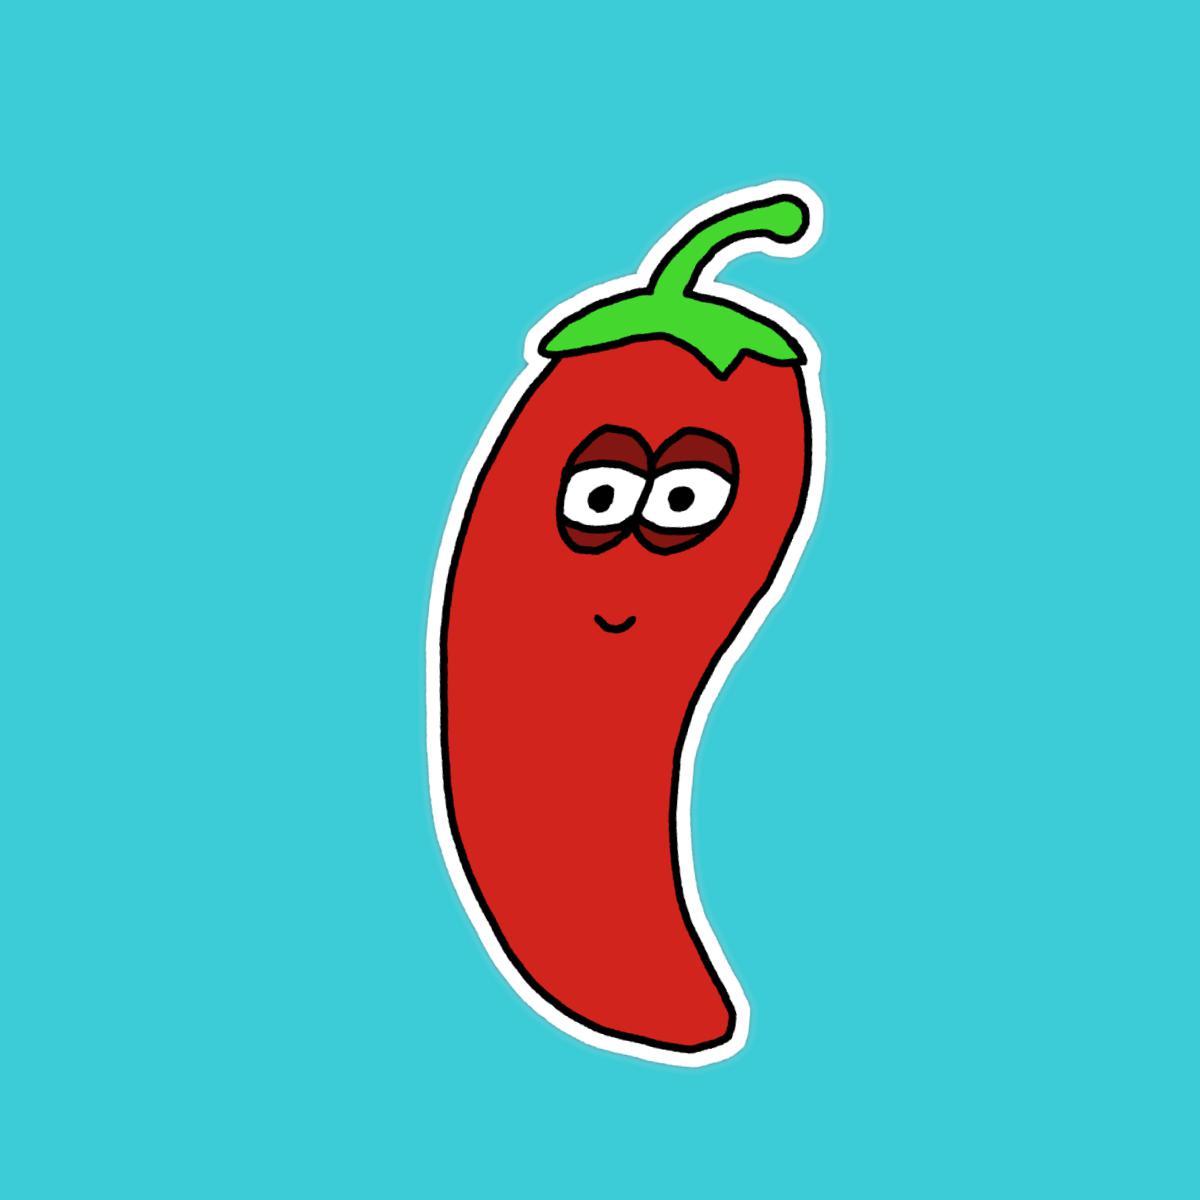 Chili Pepper Sticker